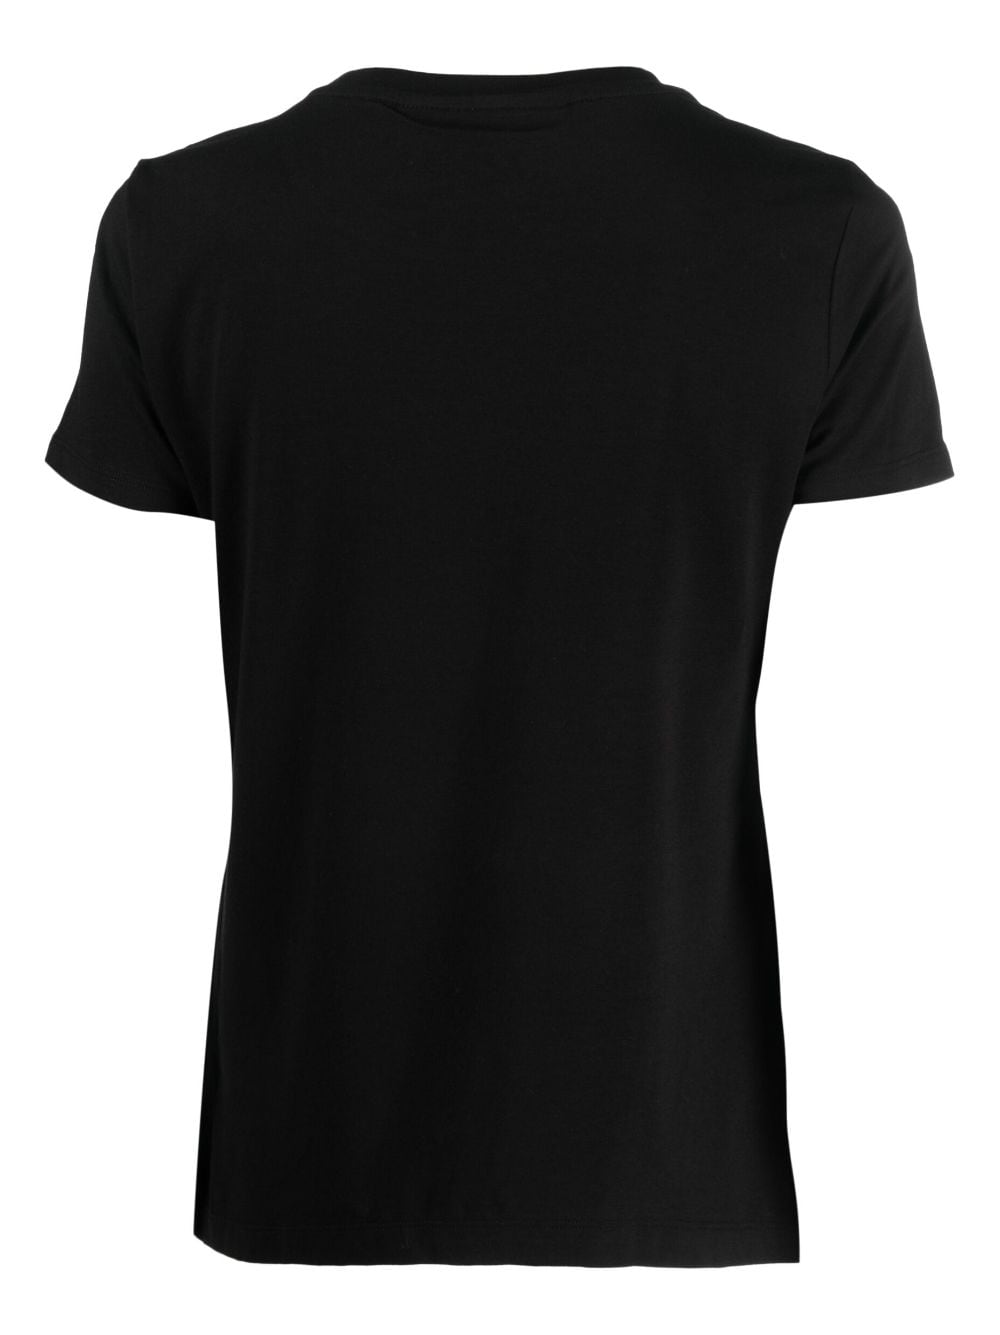 Cotton t-shirt with logo - DKNY - Virno